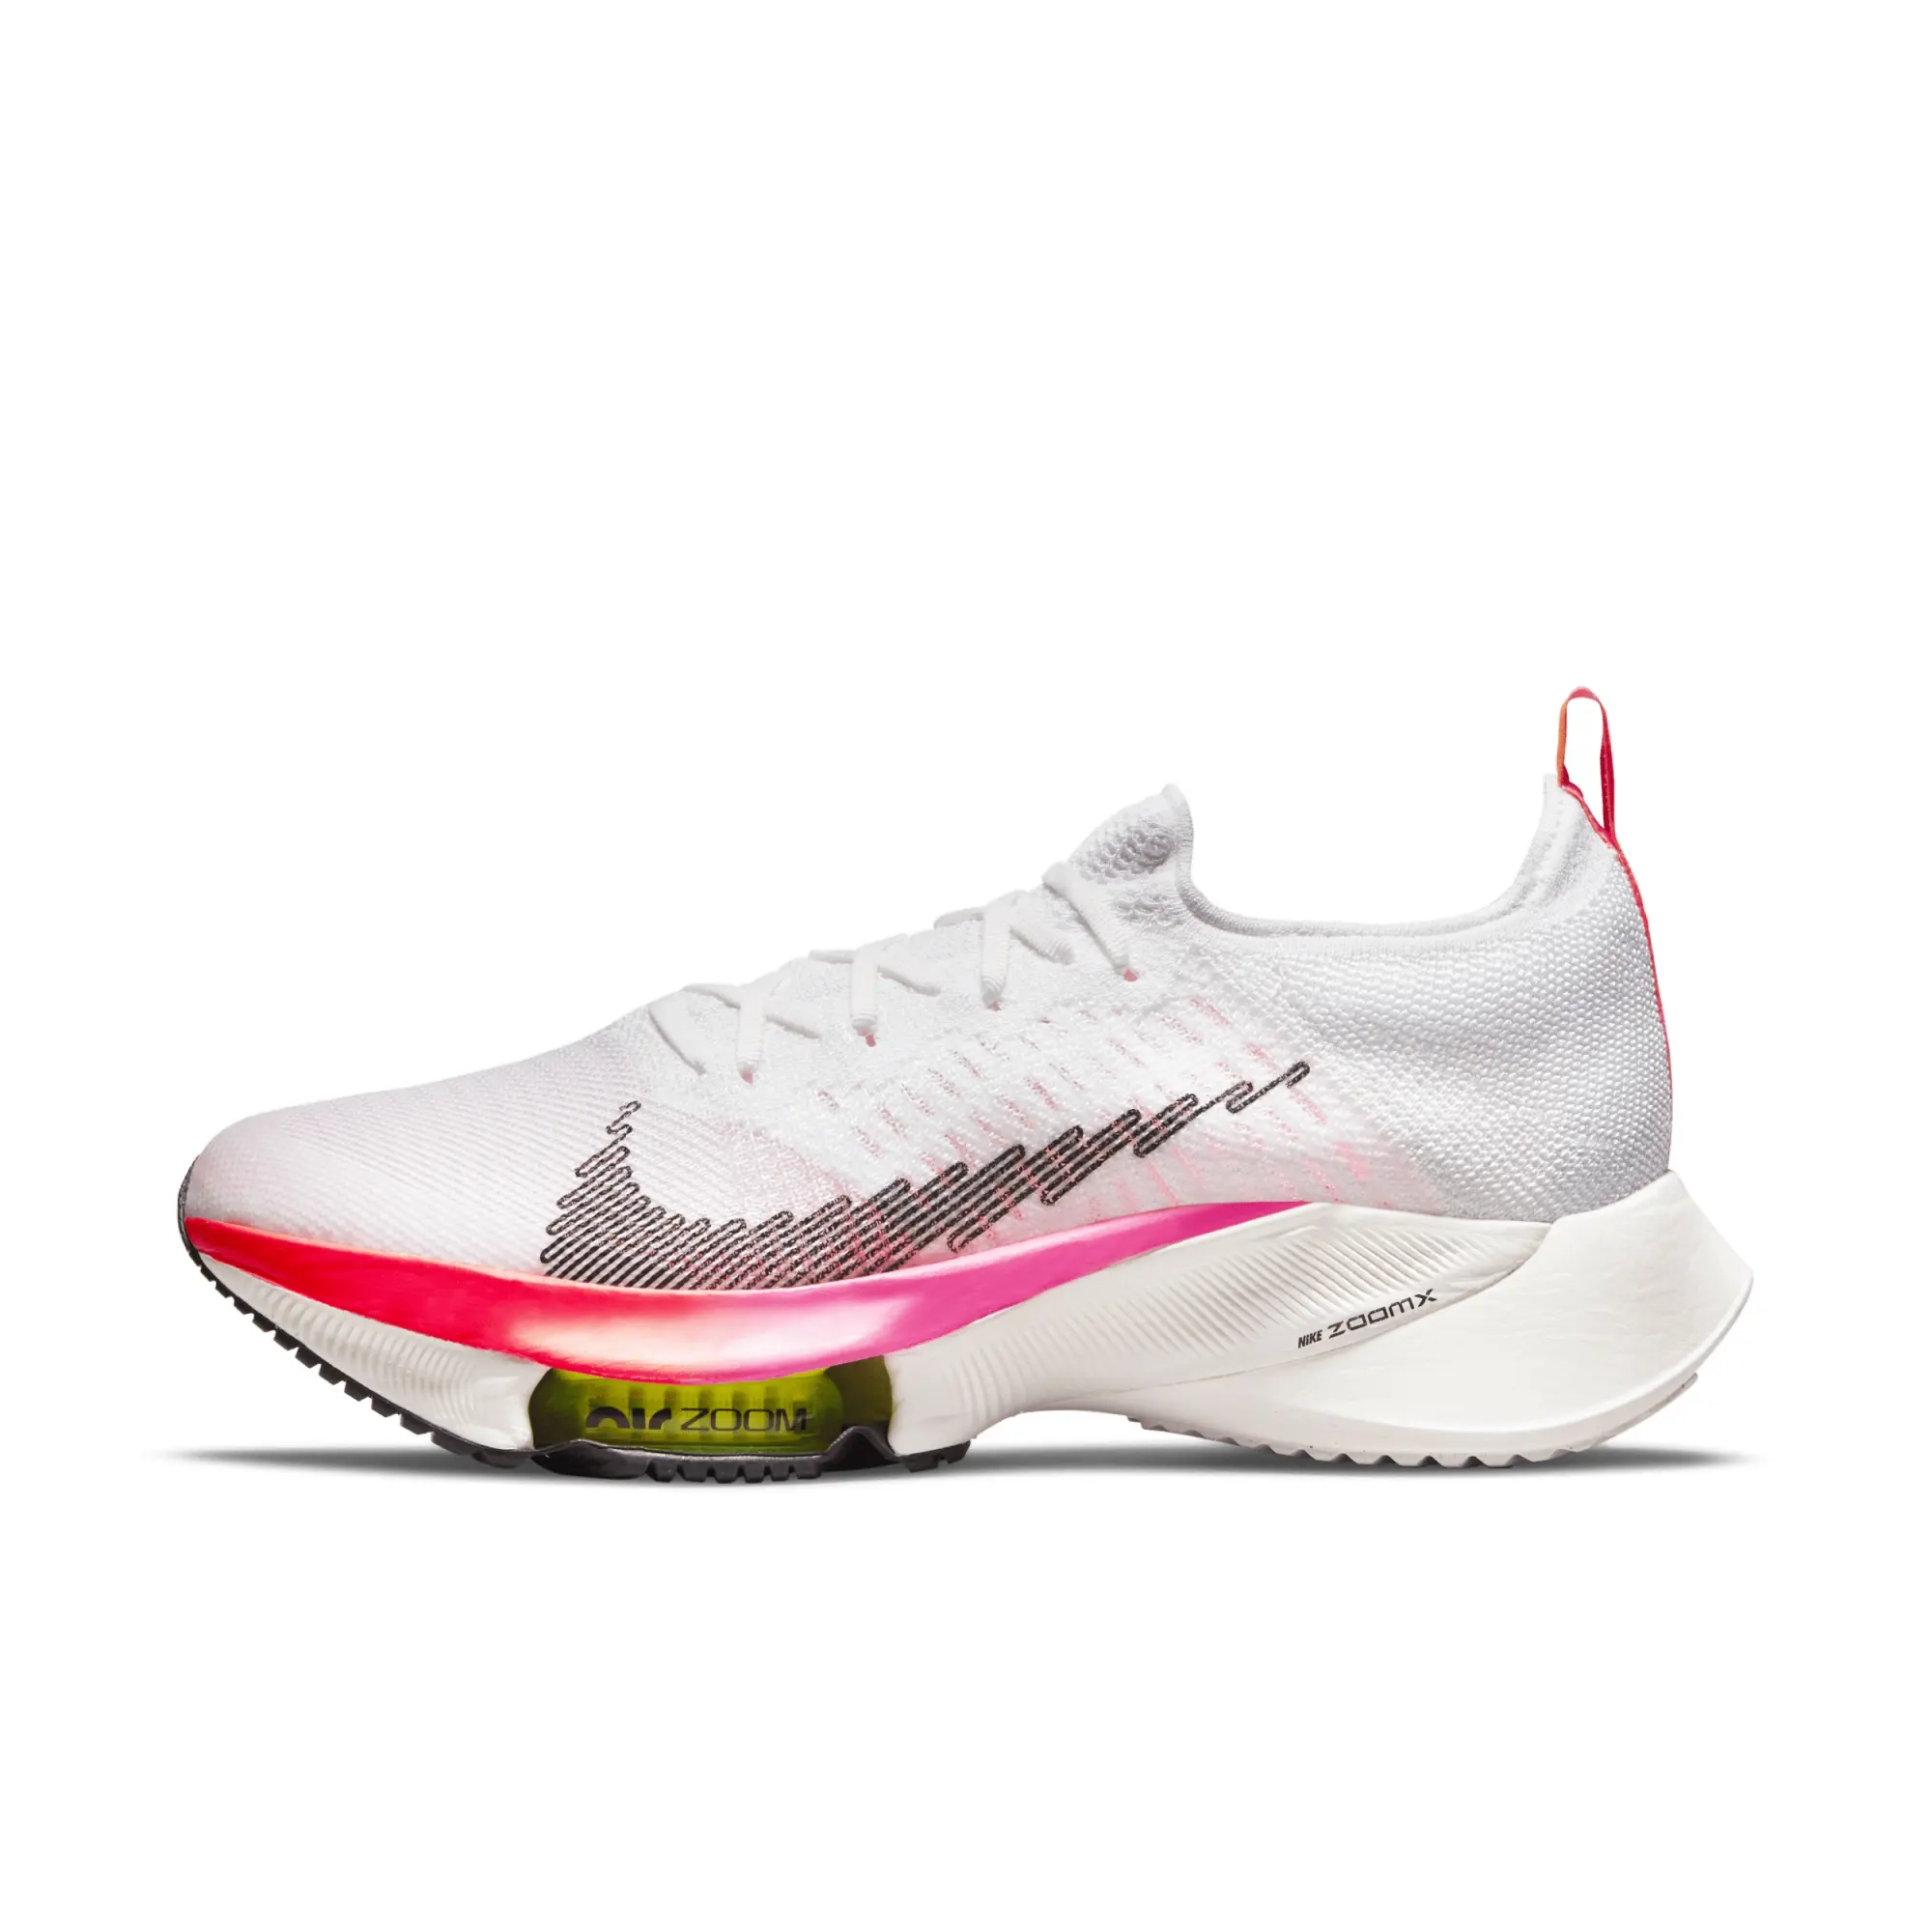 Nike Air Zoom Tempo NEXT% Men's Running Shoe - White